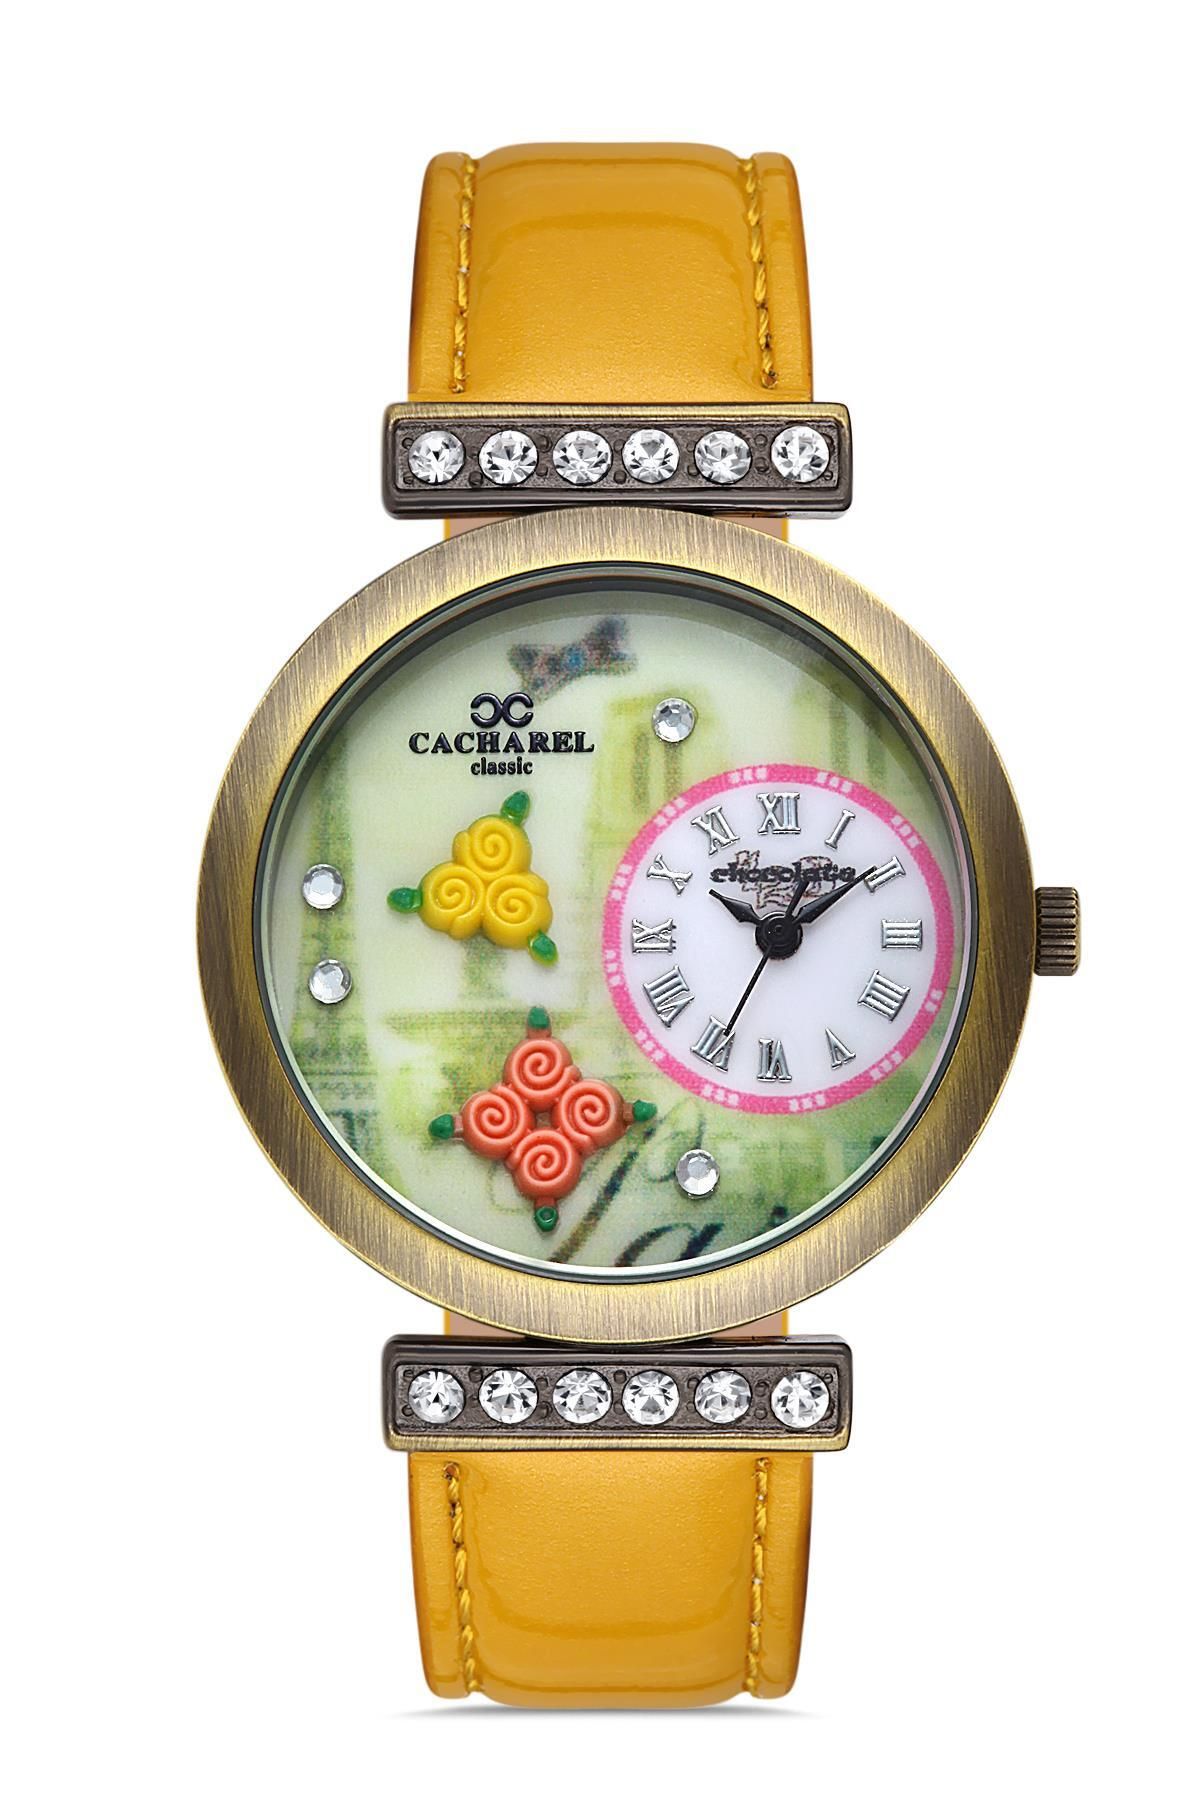 Cacharel Classic Cc Genç Kız Çiçek Model Kol Saati